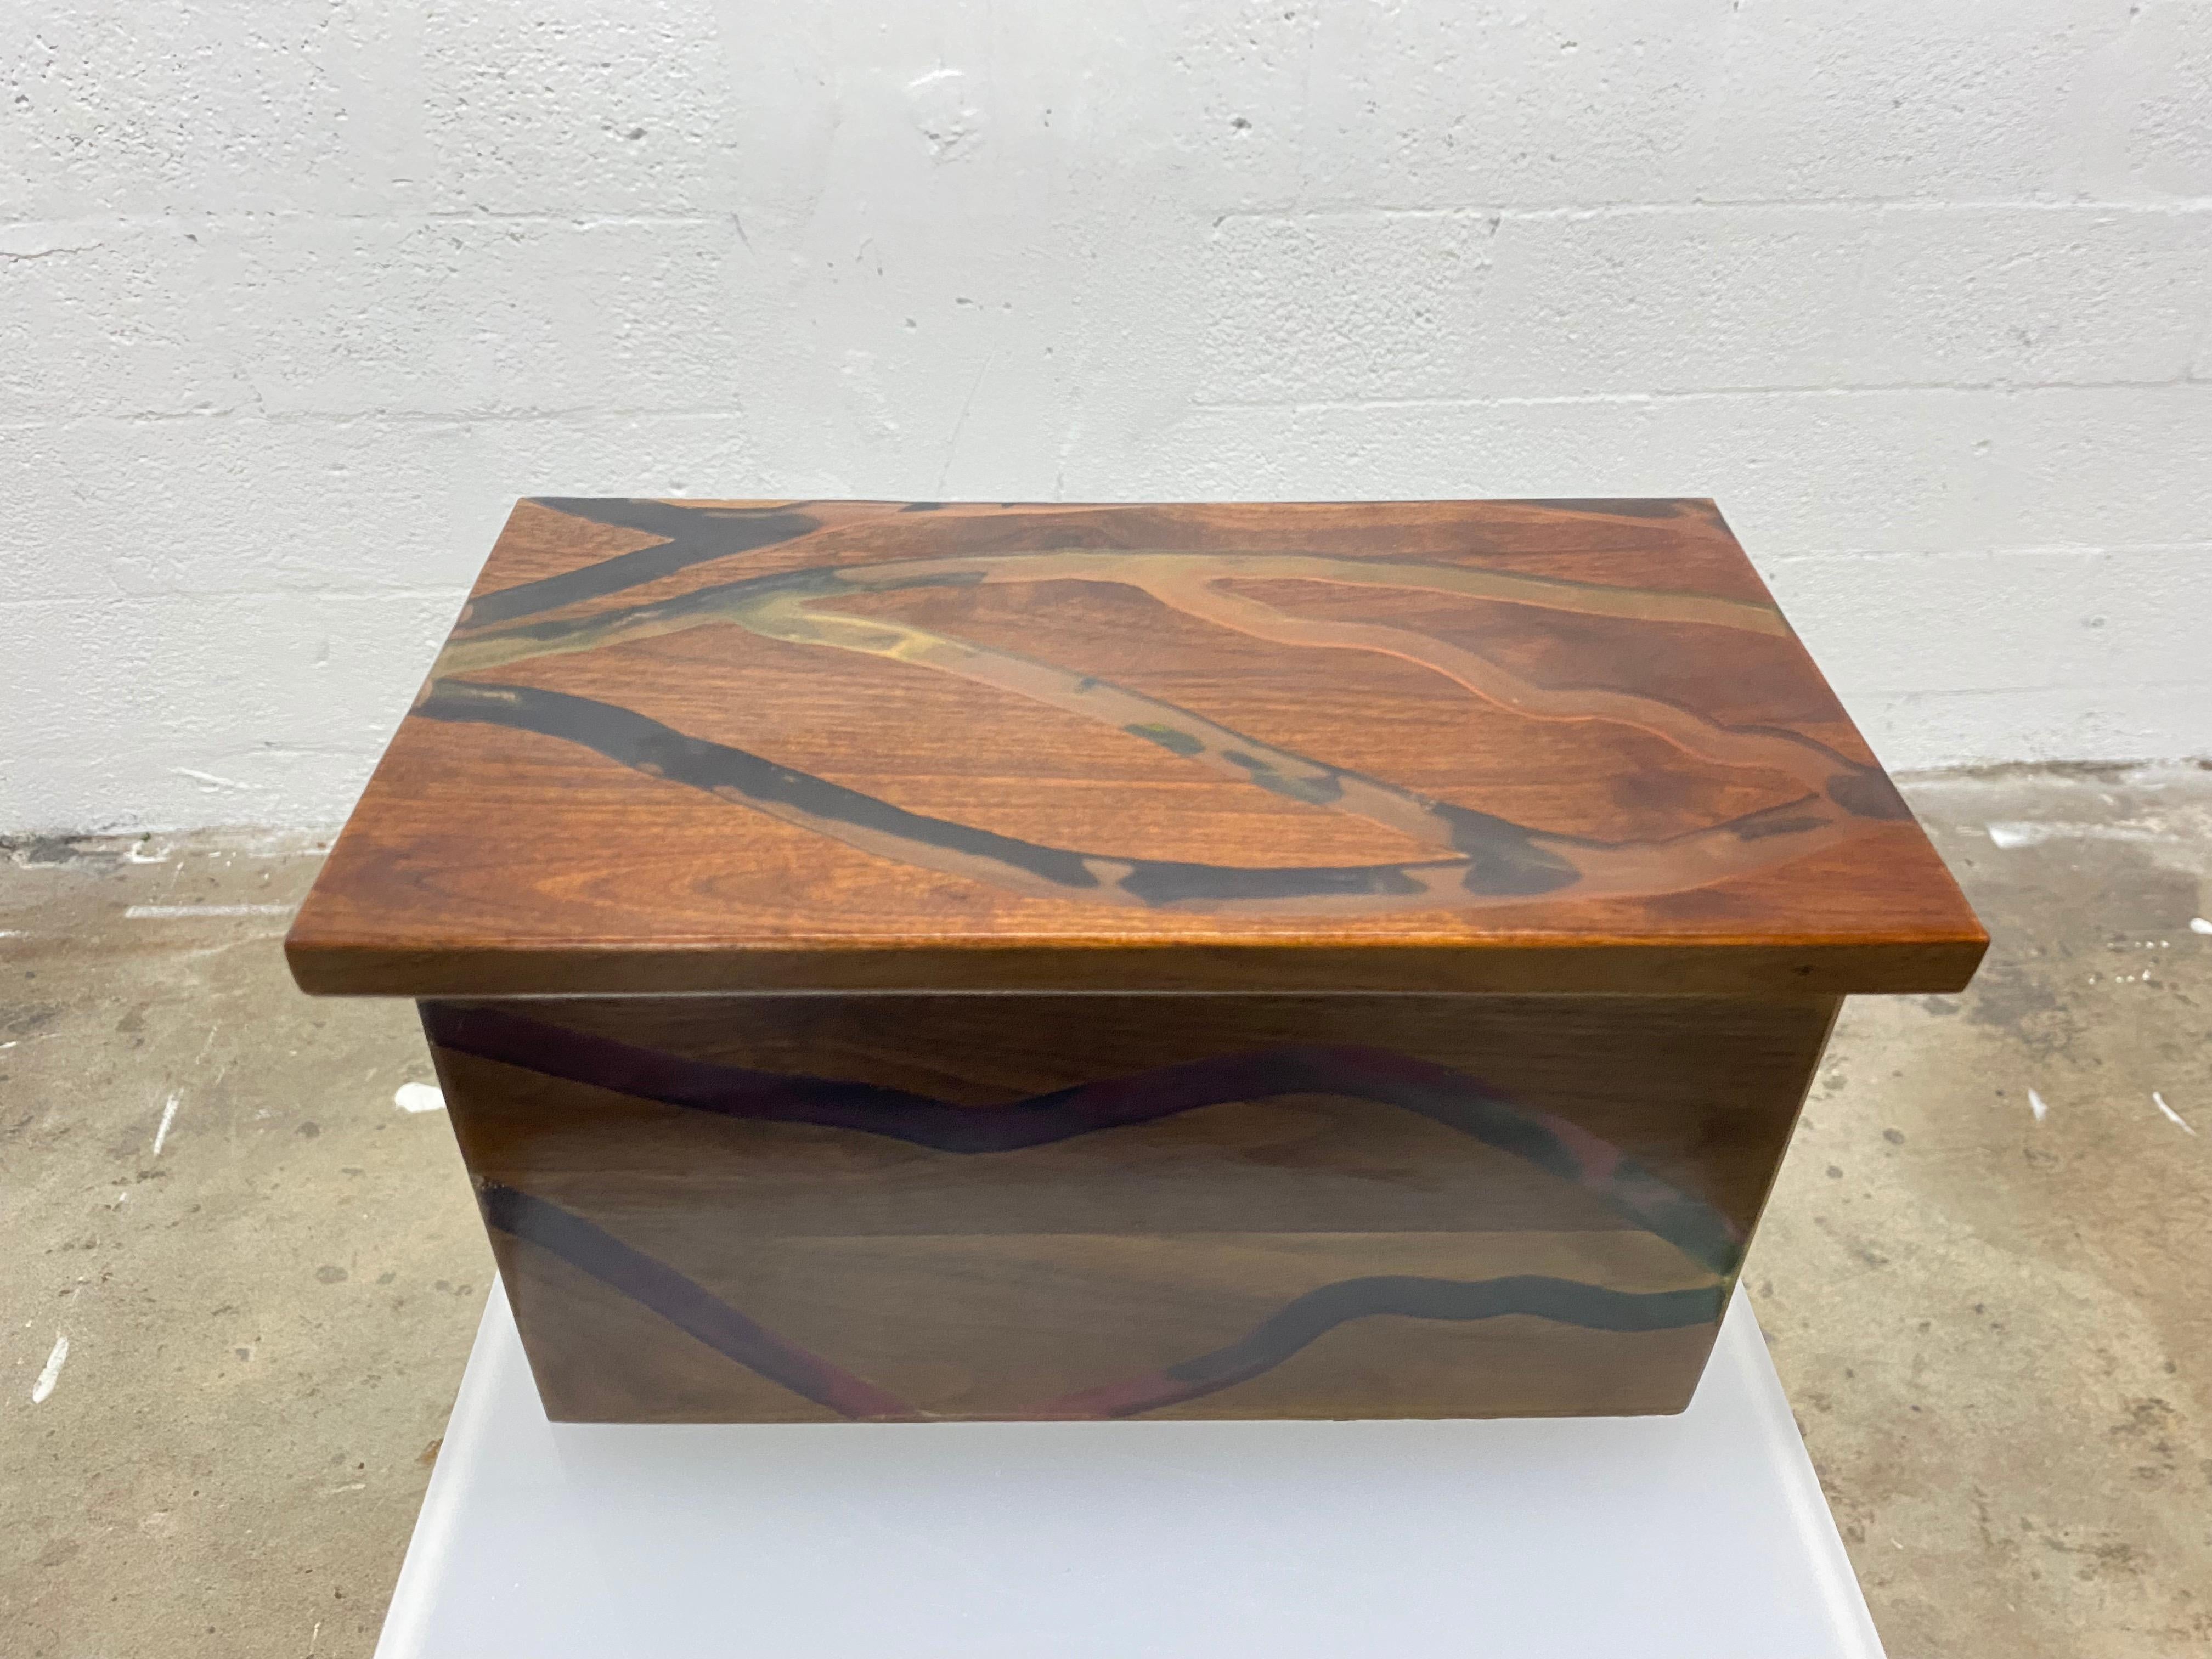 resin wooden box